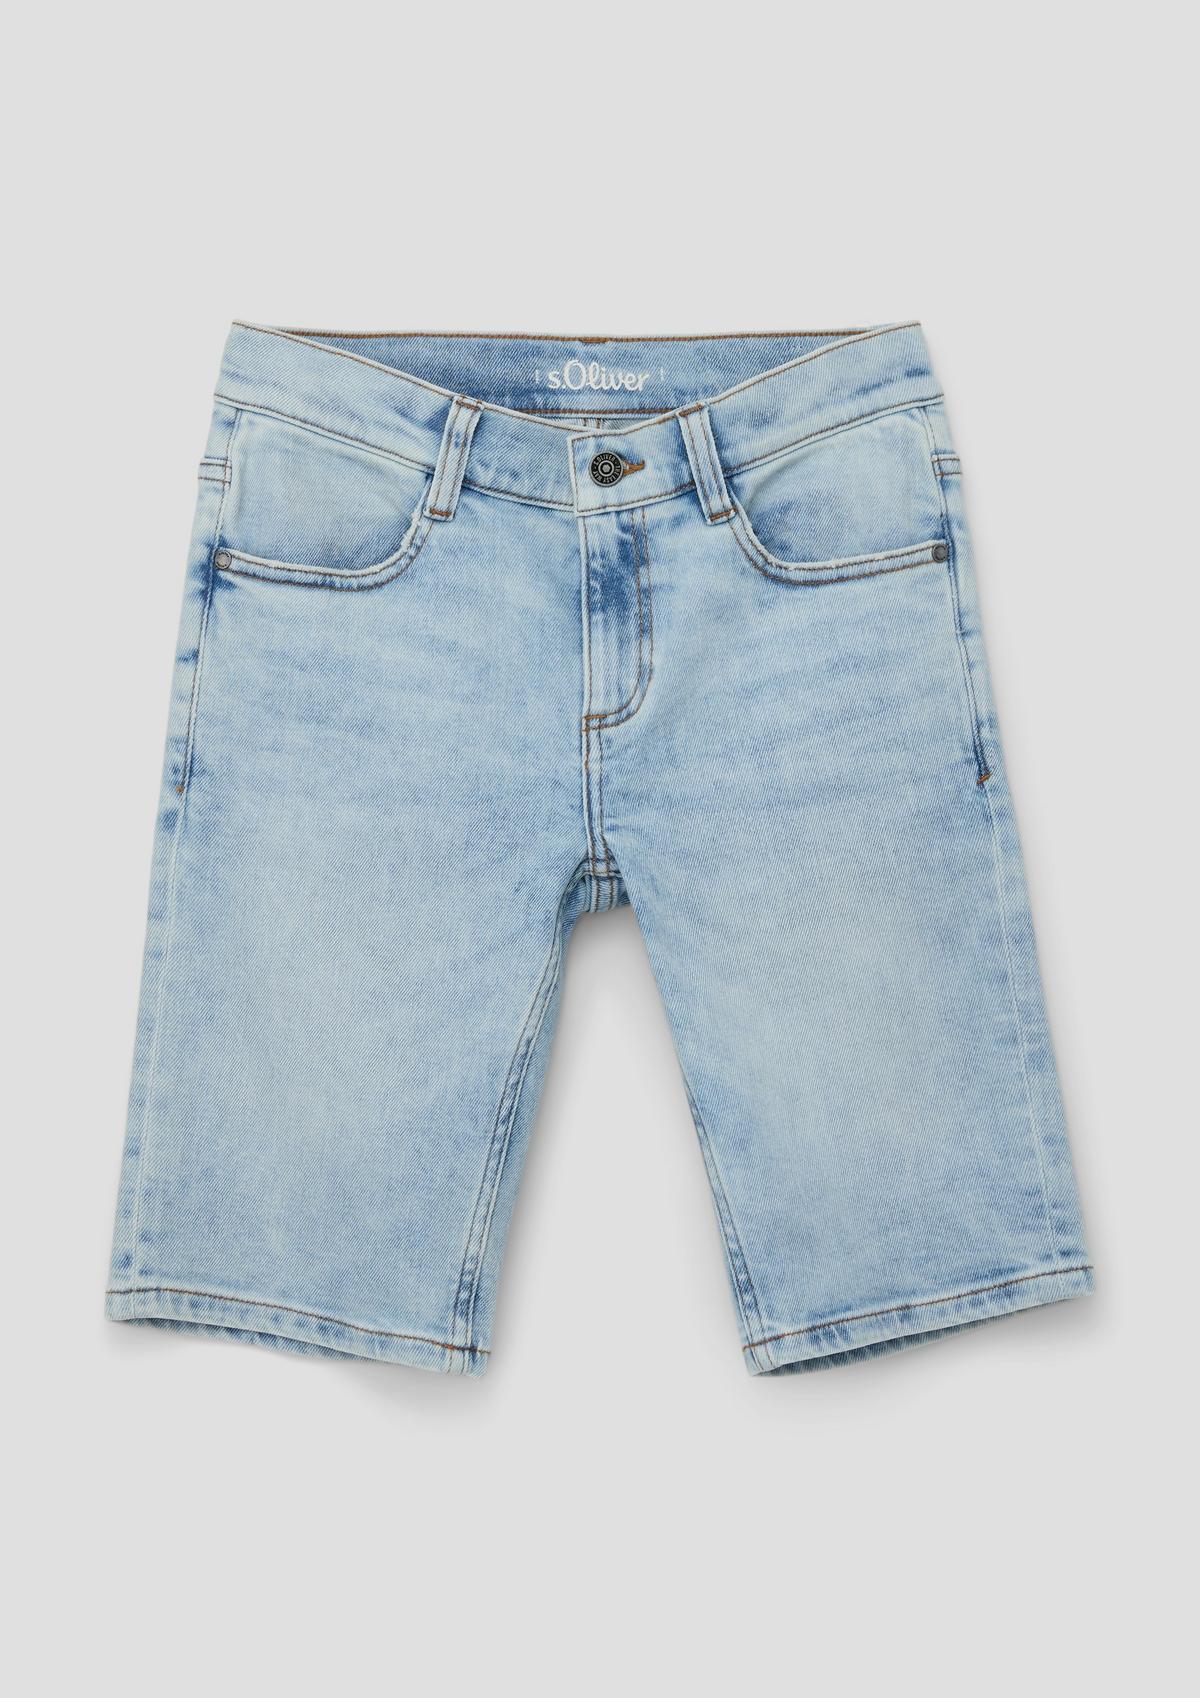 s.Oliver Bermuda-jeans Seattle / regular fit / mid rise / slim leg